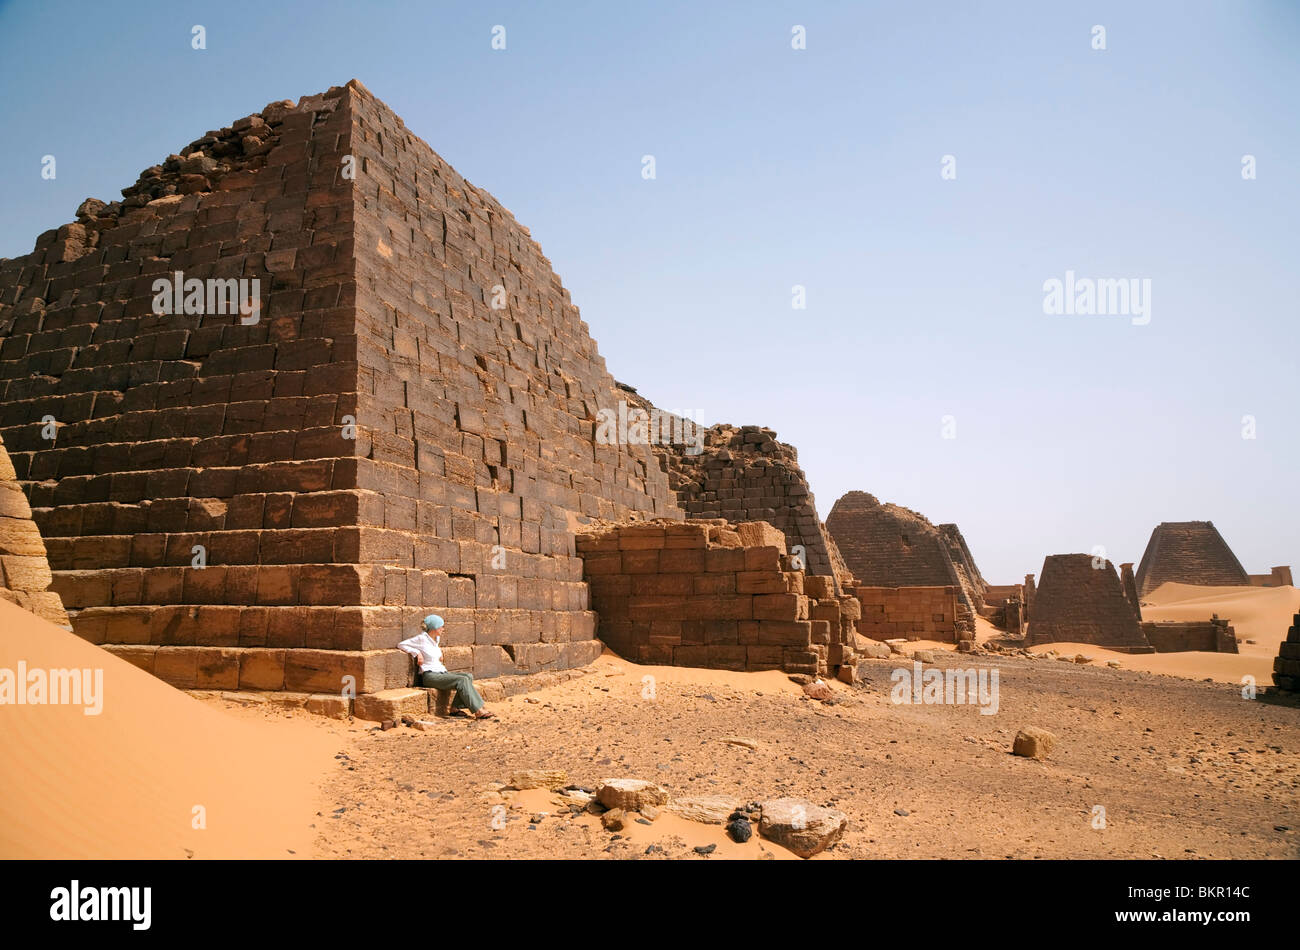 Sudan, Begrawiya. A tourist explores the ancient Nubian Pyramids. Stock Photo